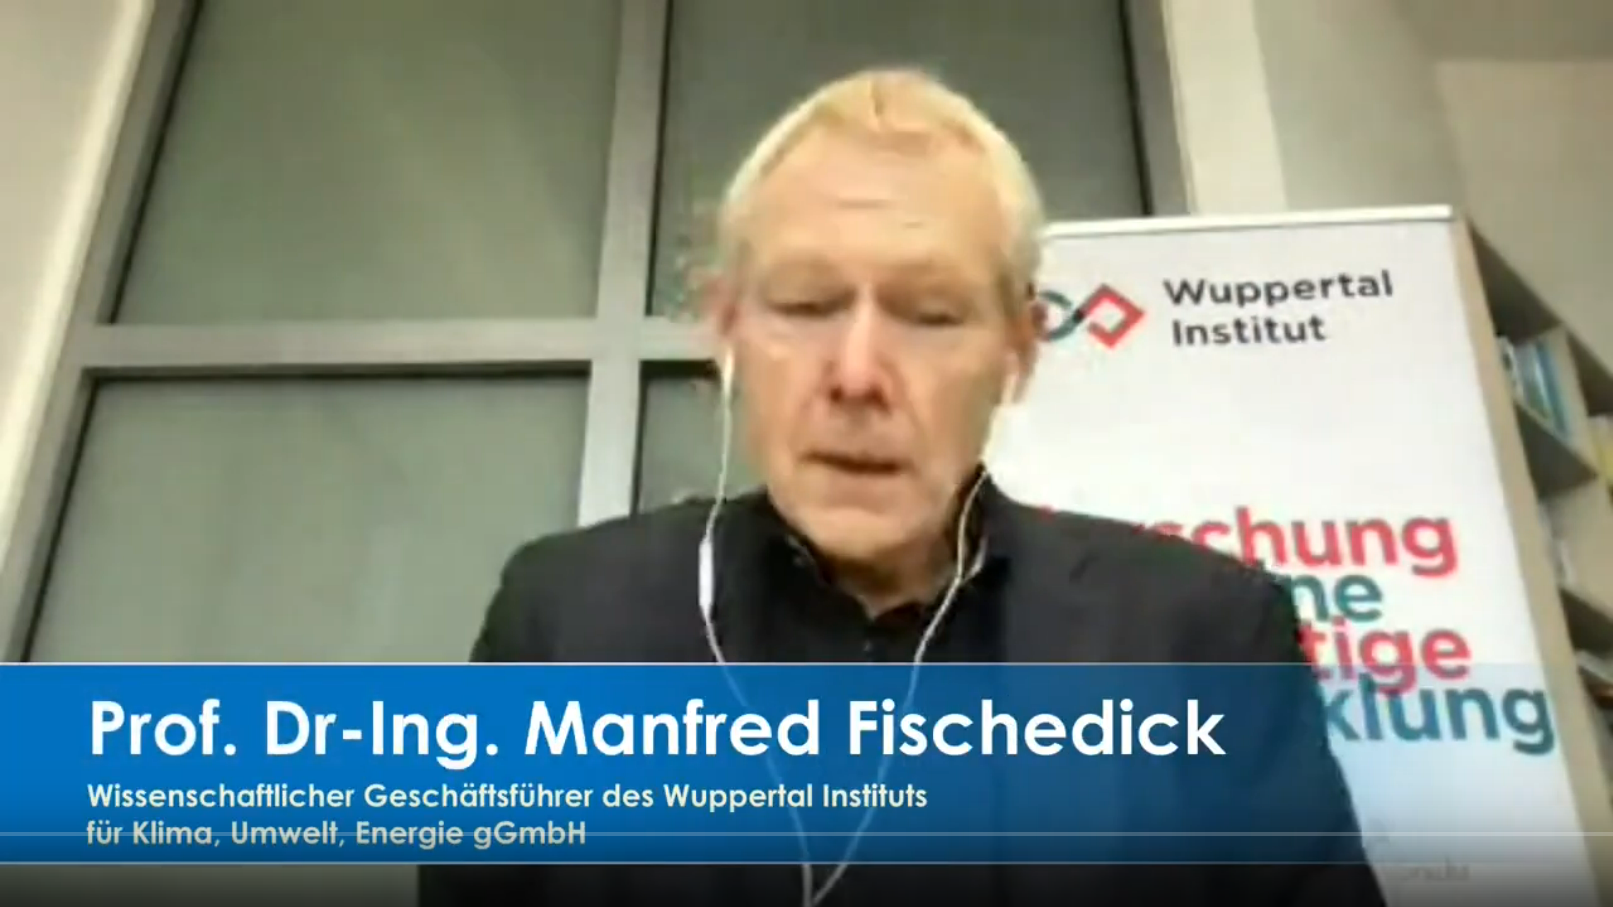 Prof. Manfred Fischedick